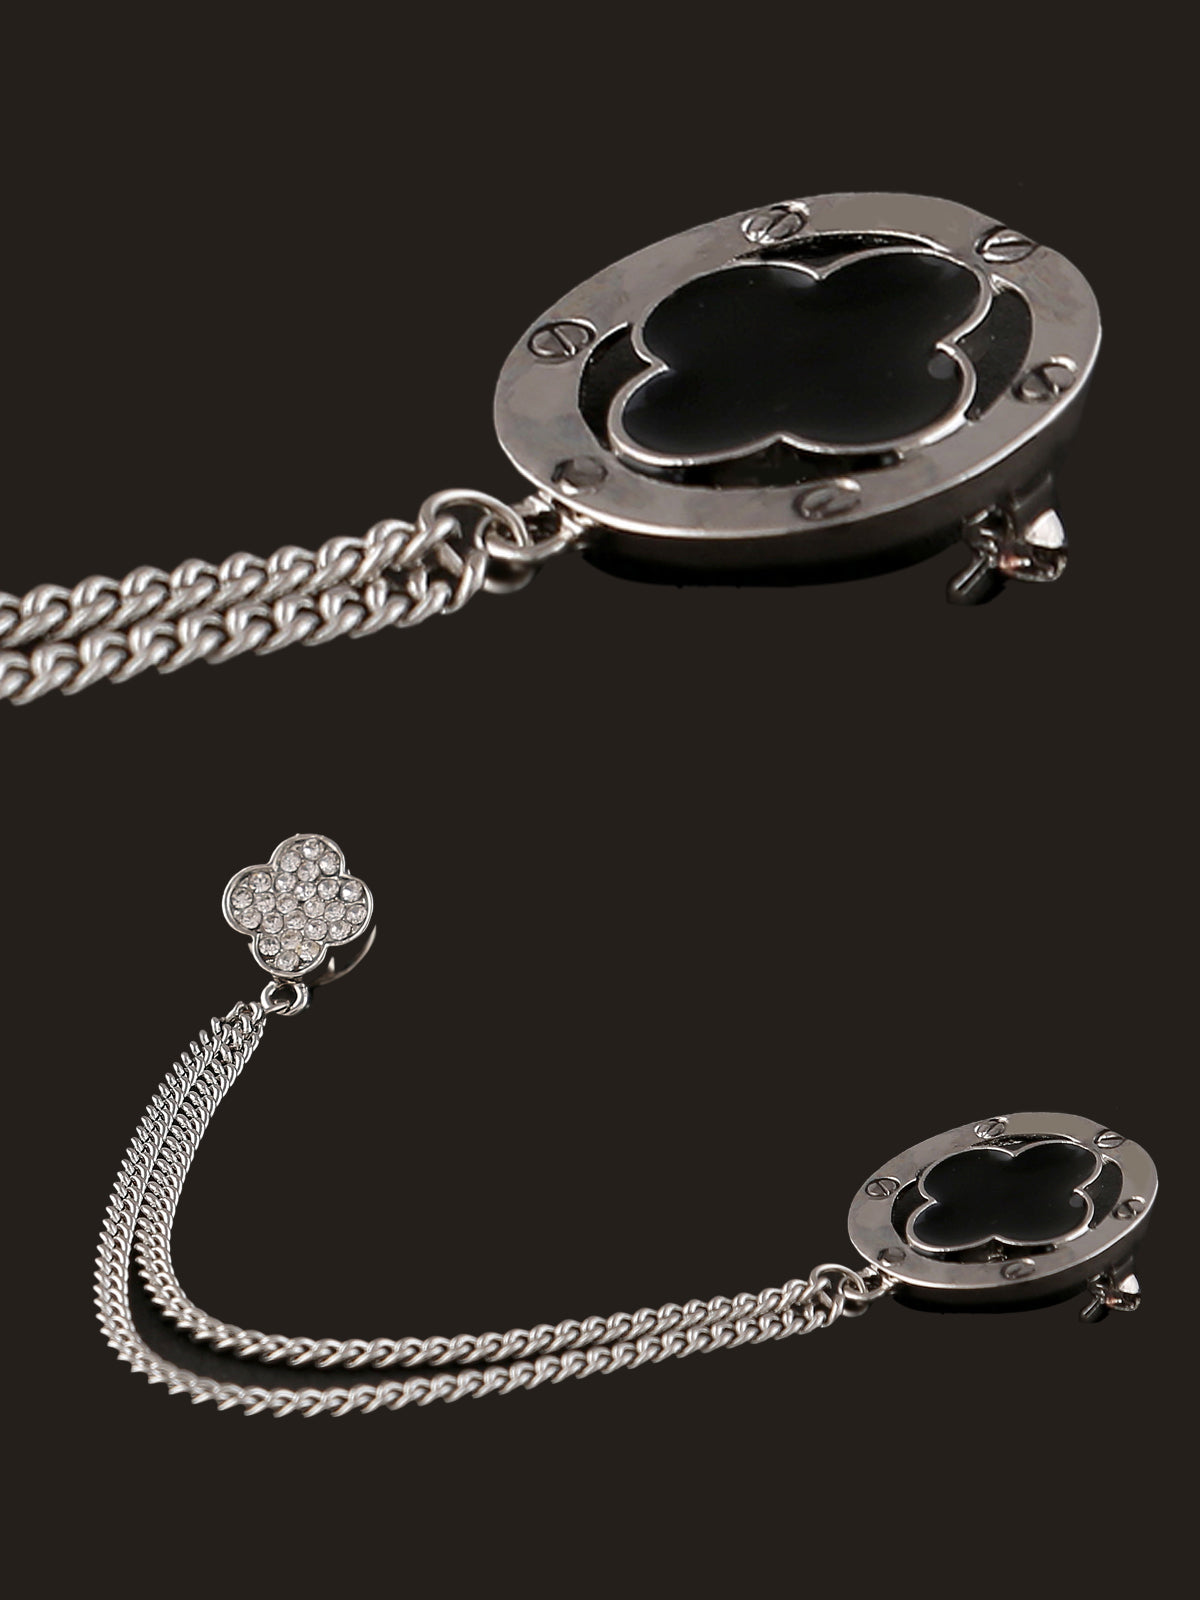 Shiny Silver Charming Fashionable Chain Pin Brooch